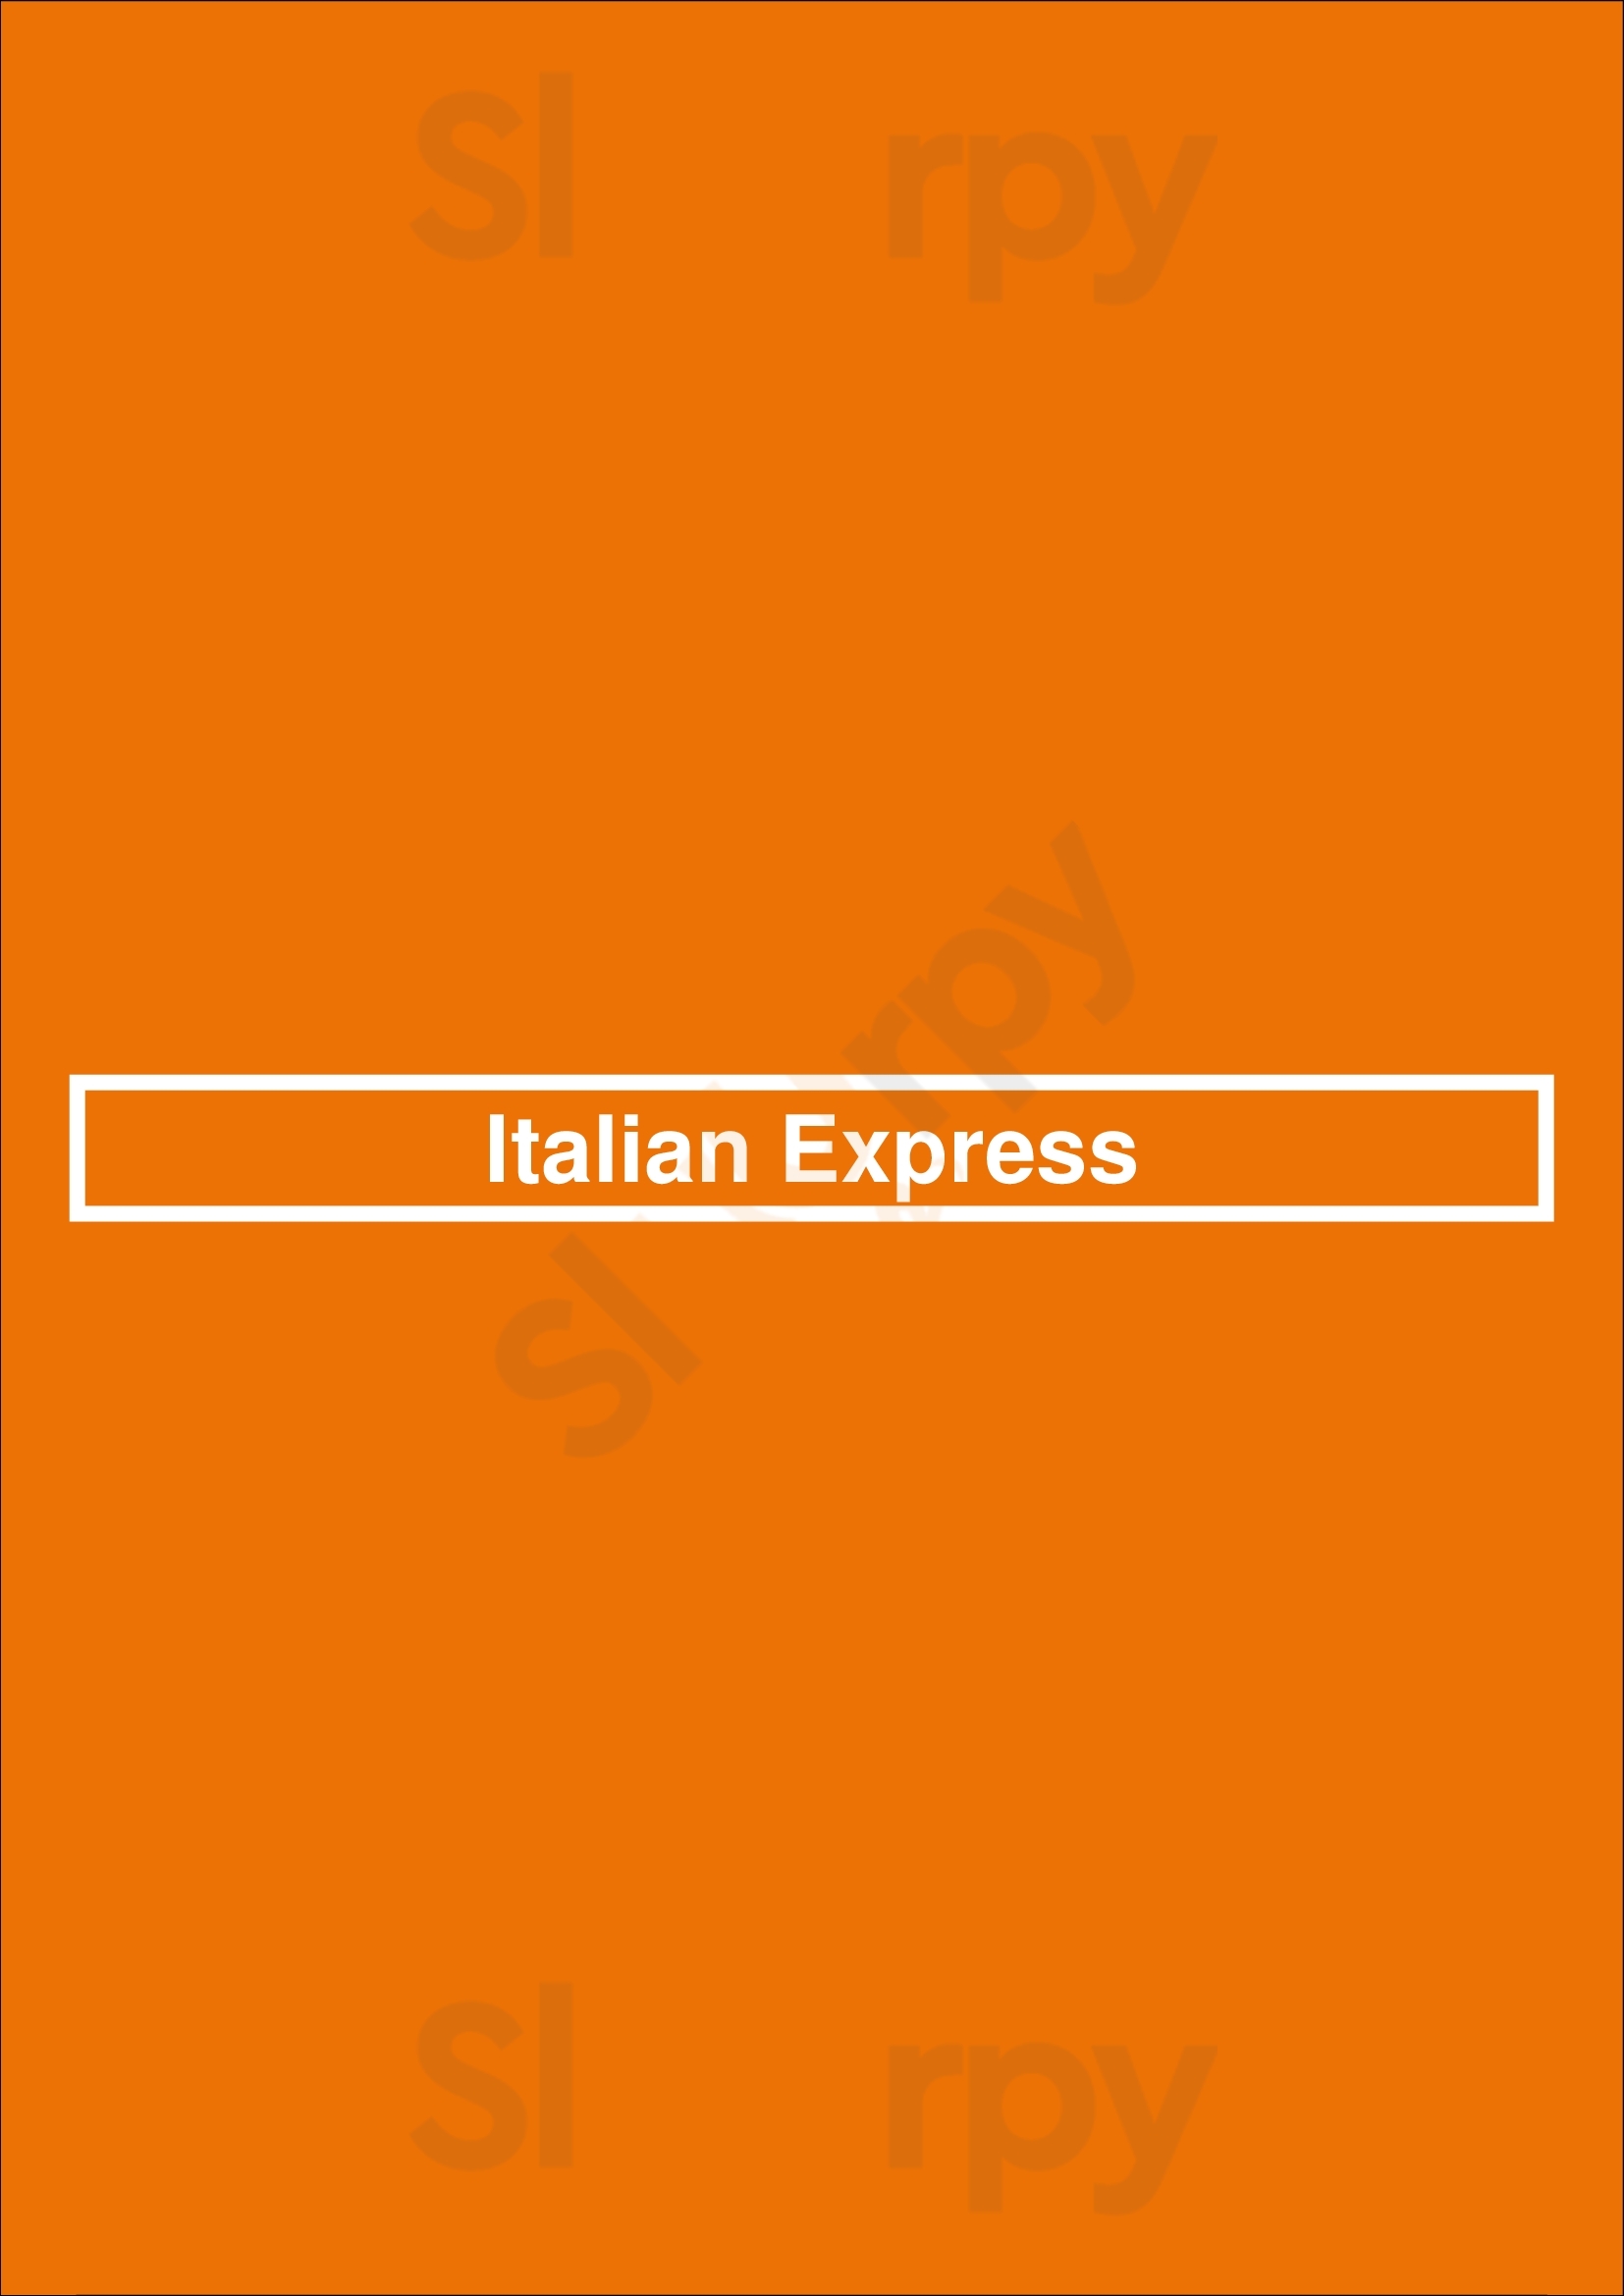 Italian Express Chicago Menu - 1